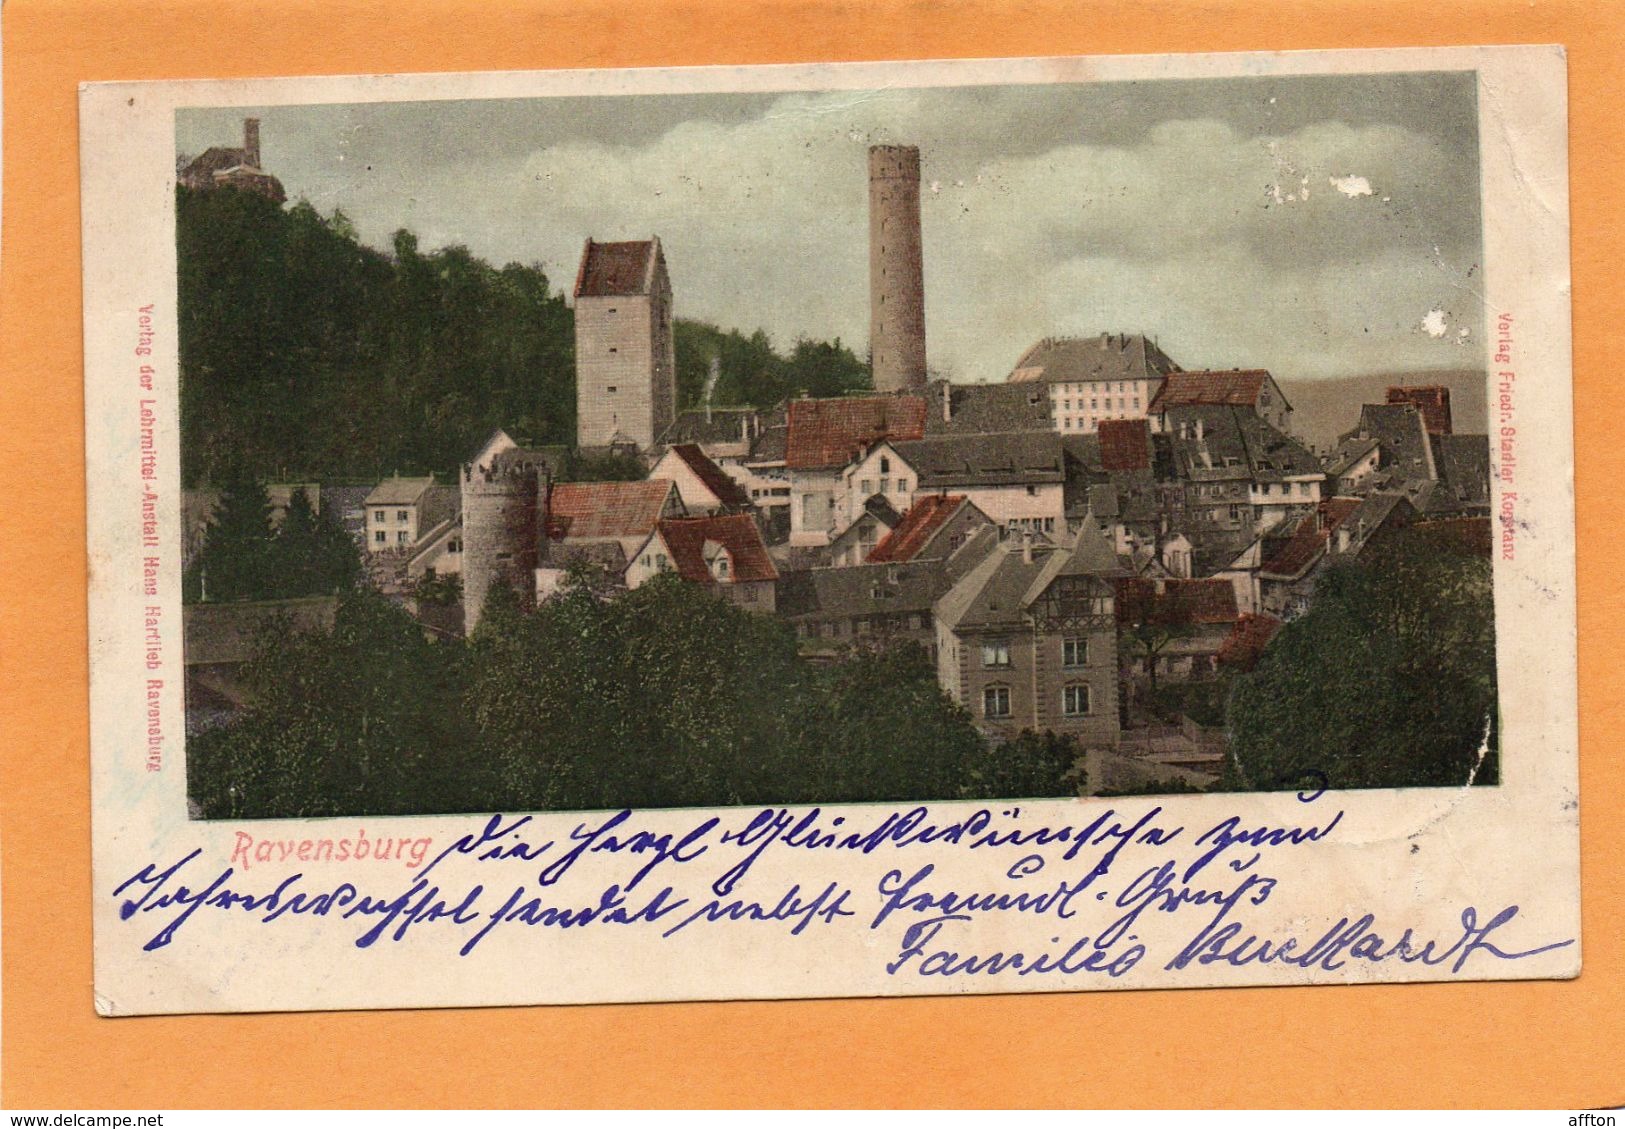 Gruss Aus Ravensburg Germany 1899 Postcard - Ravensburg